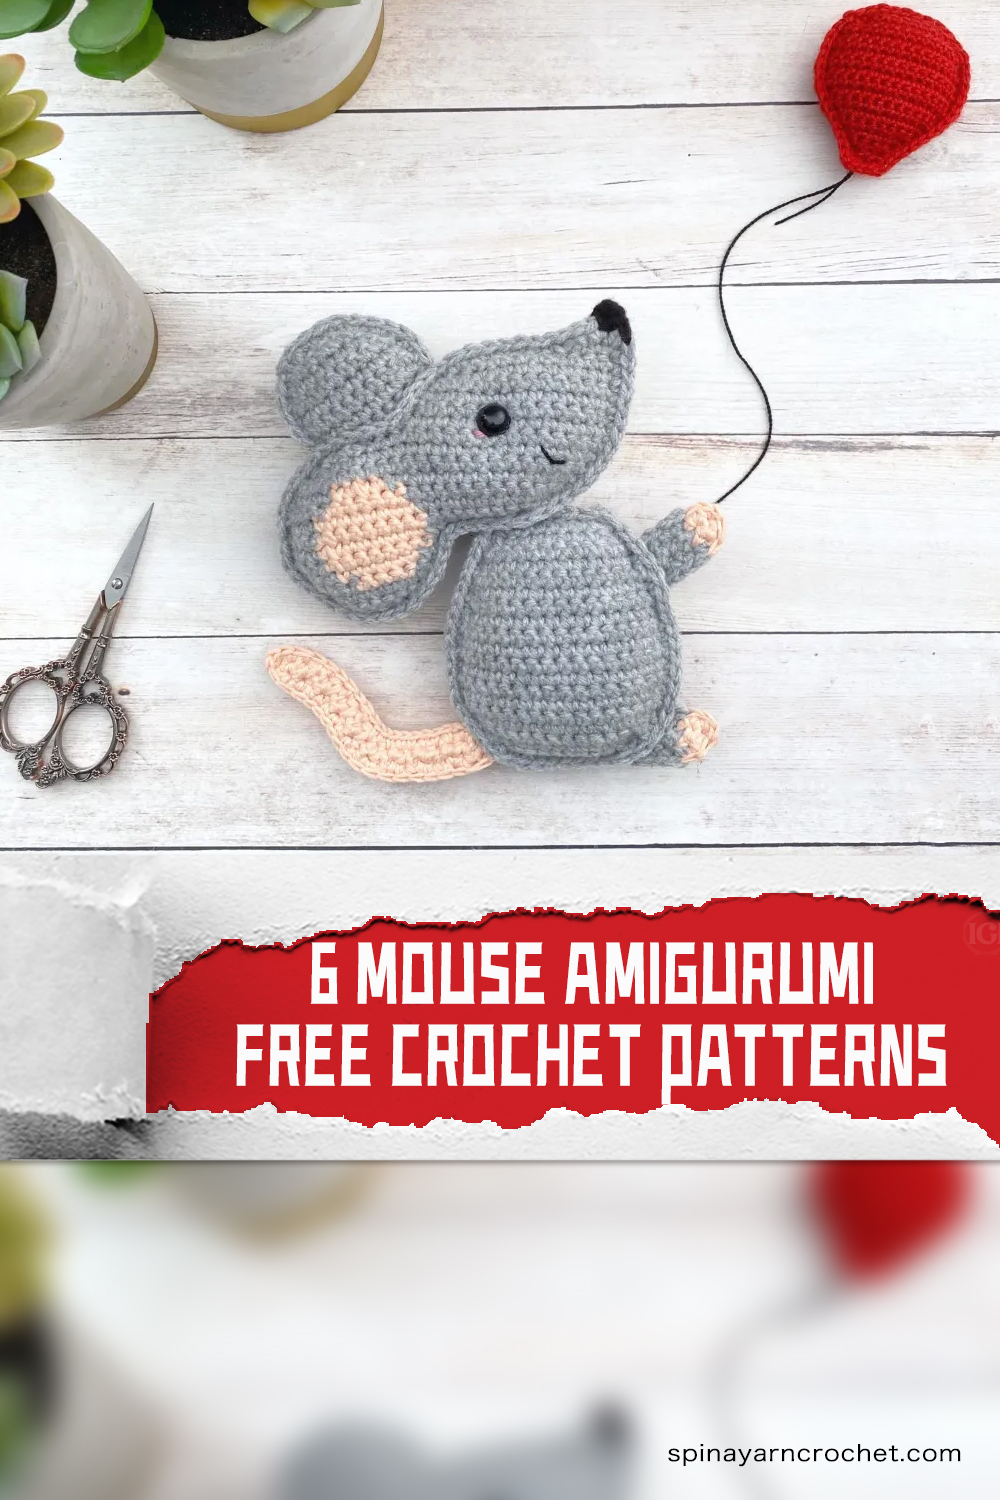 6 FREE Mouse Amigurumi Crochet Patterns